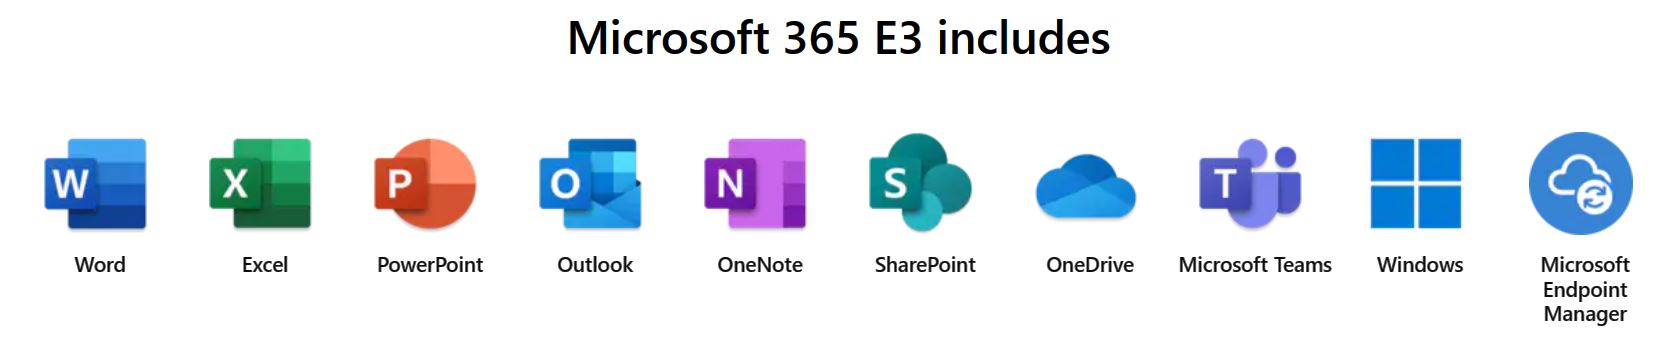 Microsoft 365 Enterprise E3 (Annual Subscription)